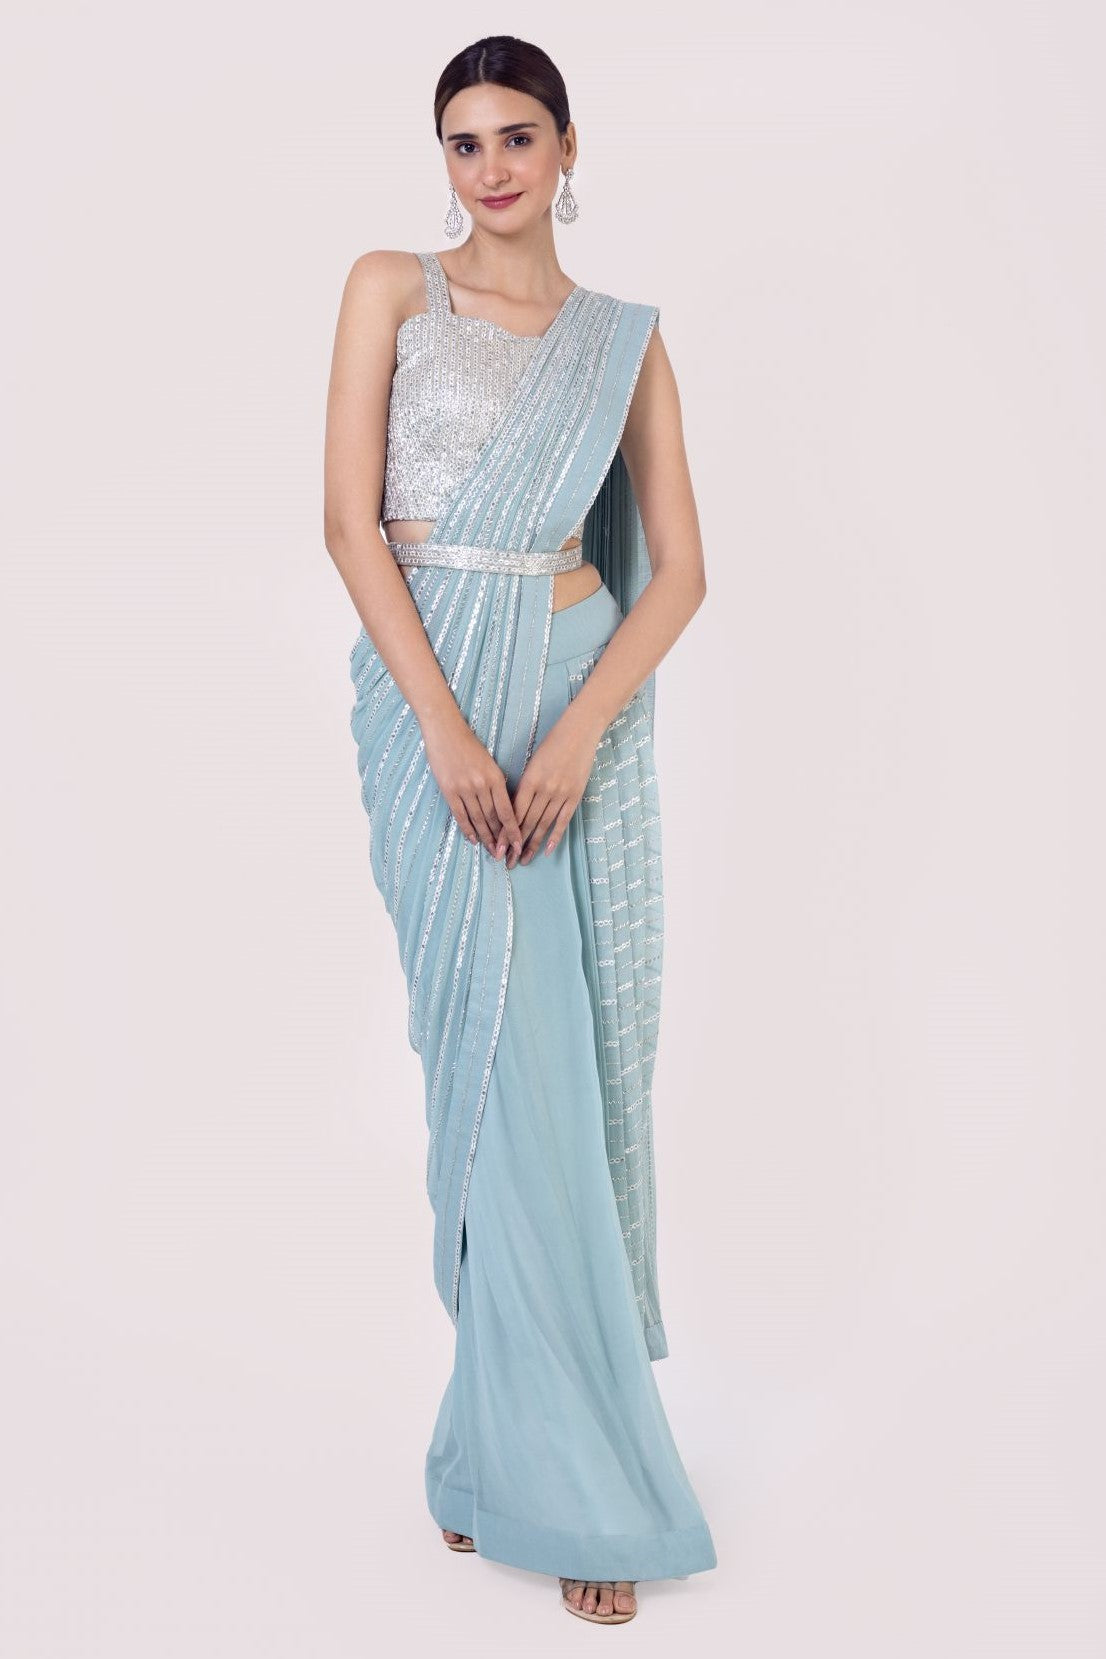 Shop Light Blue Drape Saree With Mirror Work Online in USA – Pure Elegance